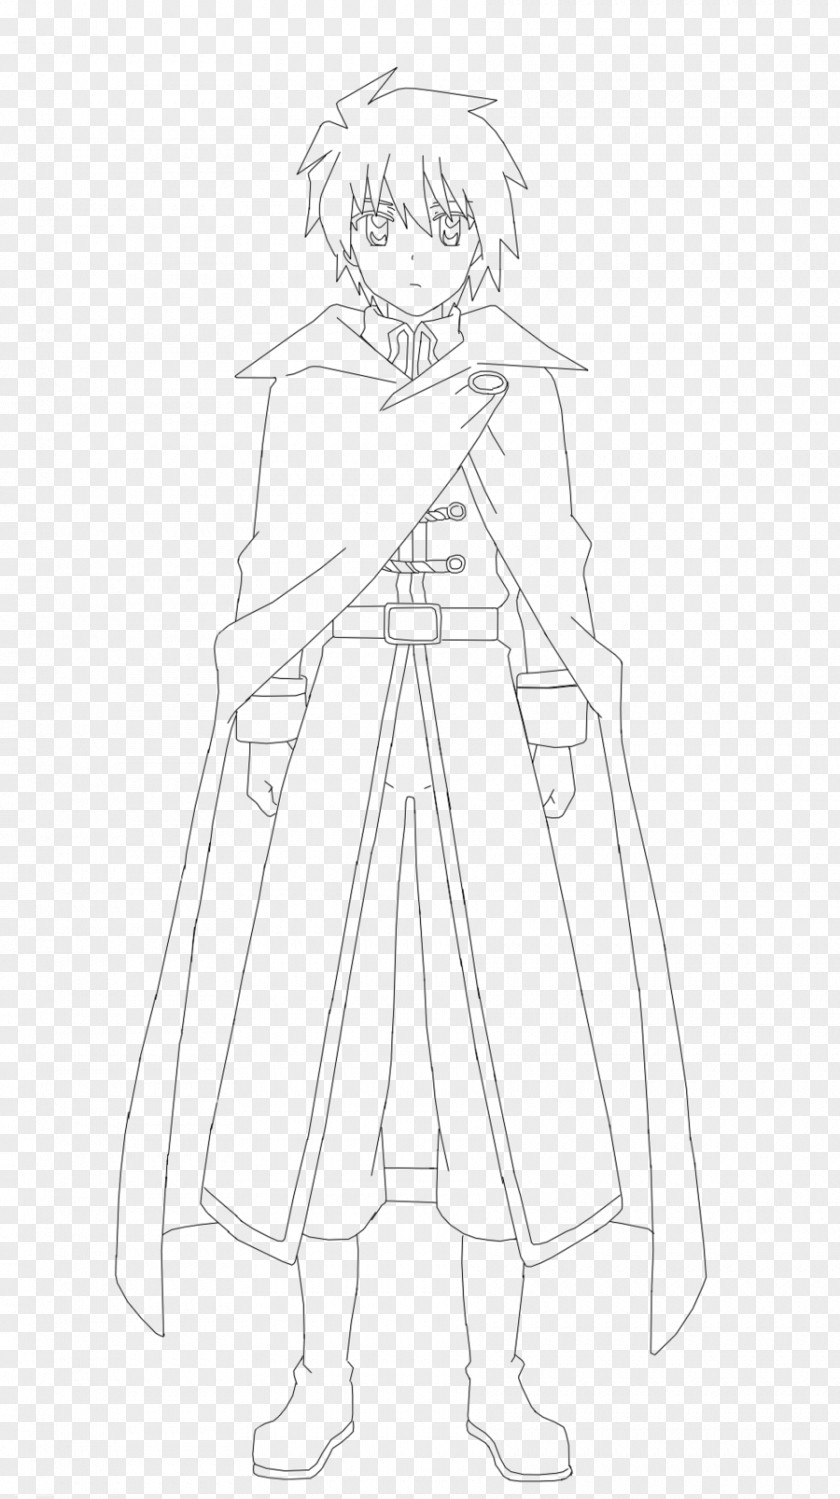 Saber Fate Zero Sketch Drawing Cartoon Human Line Art PNG